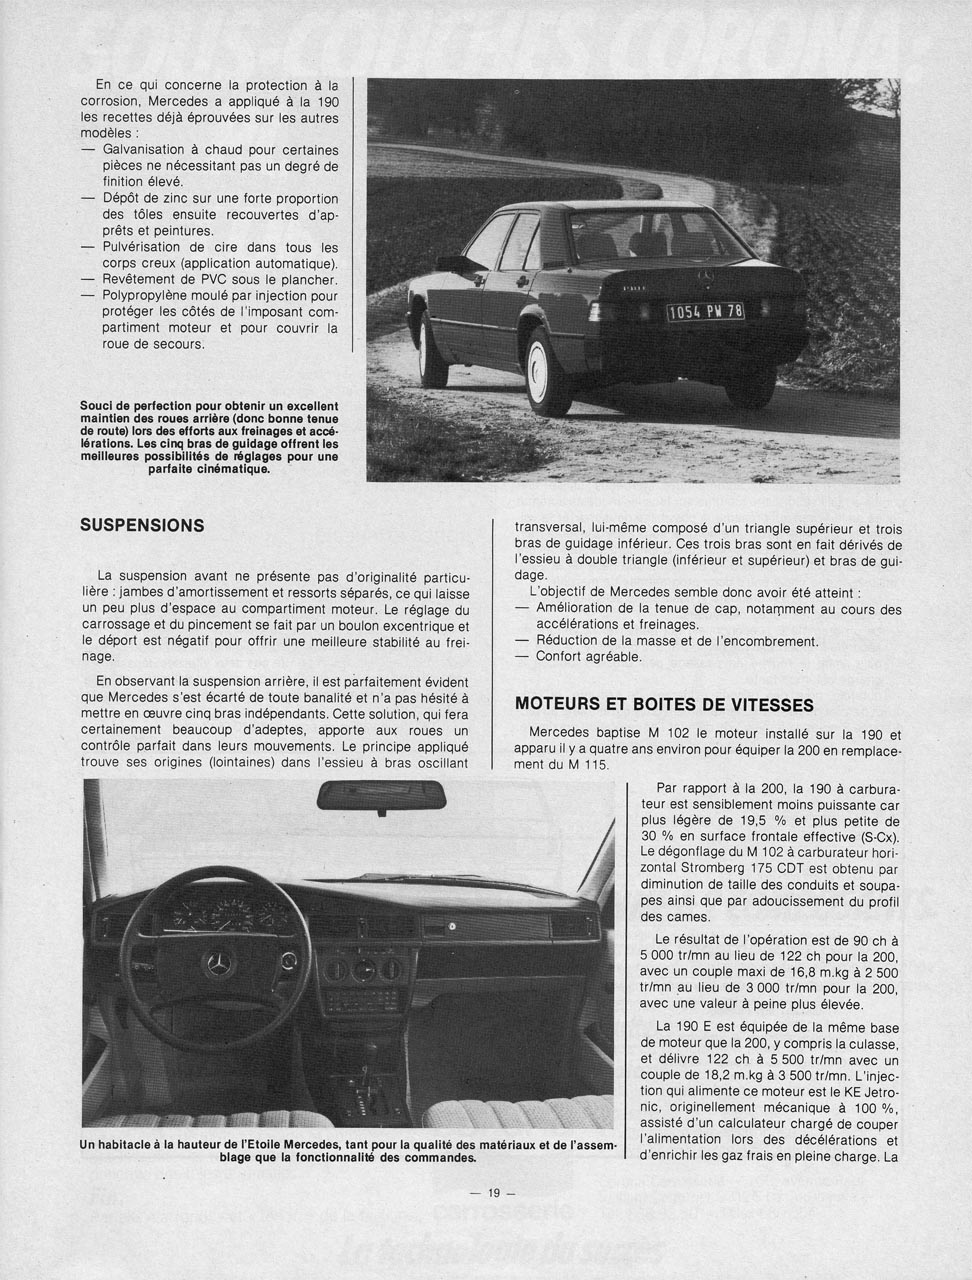 W201 - Une vraie petite Mercedes - Page 2 RTC_92_1984_W201-2